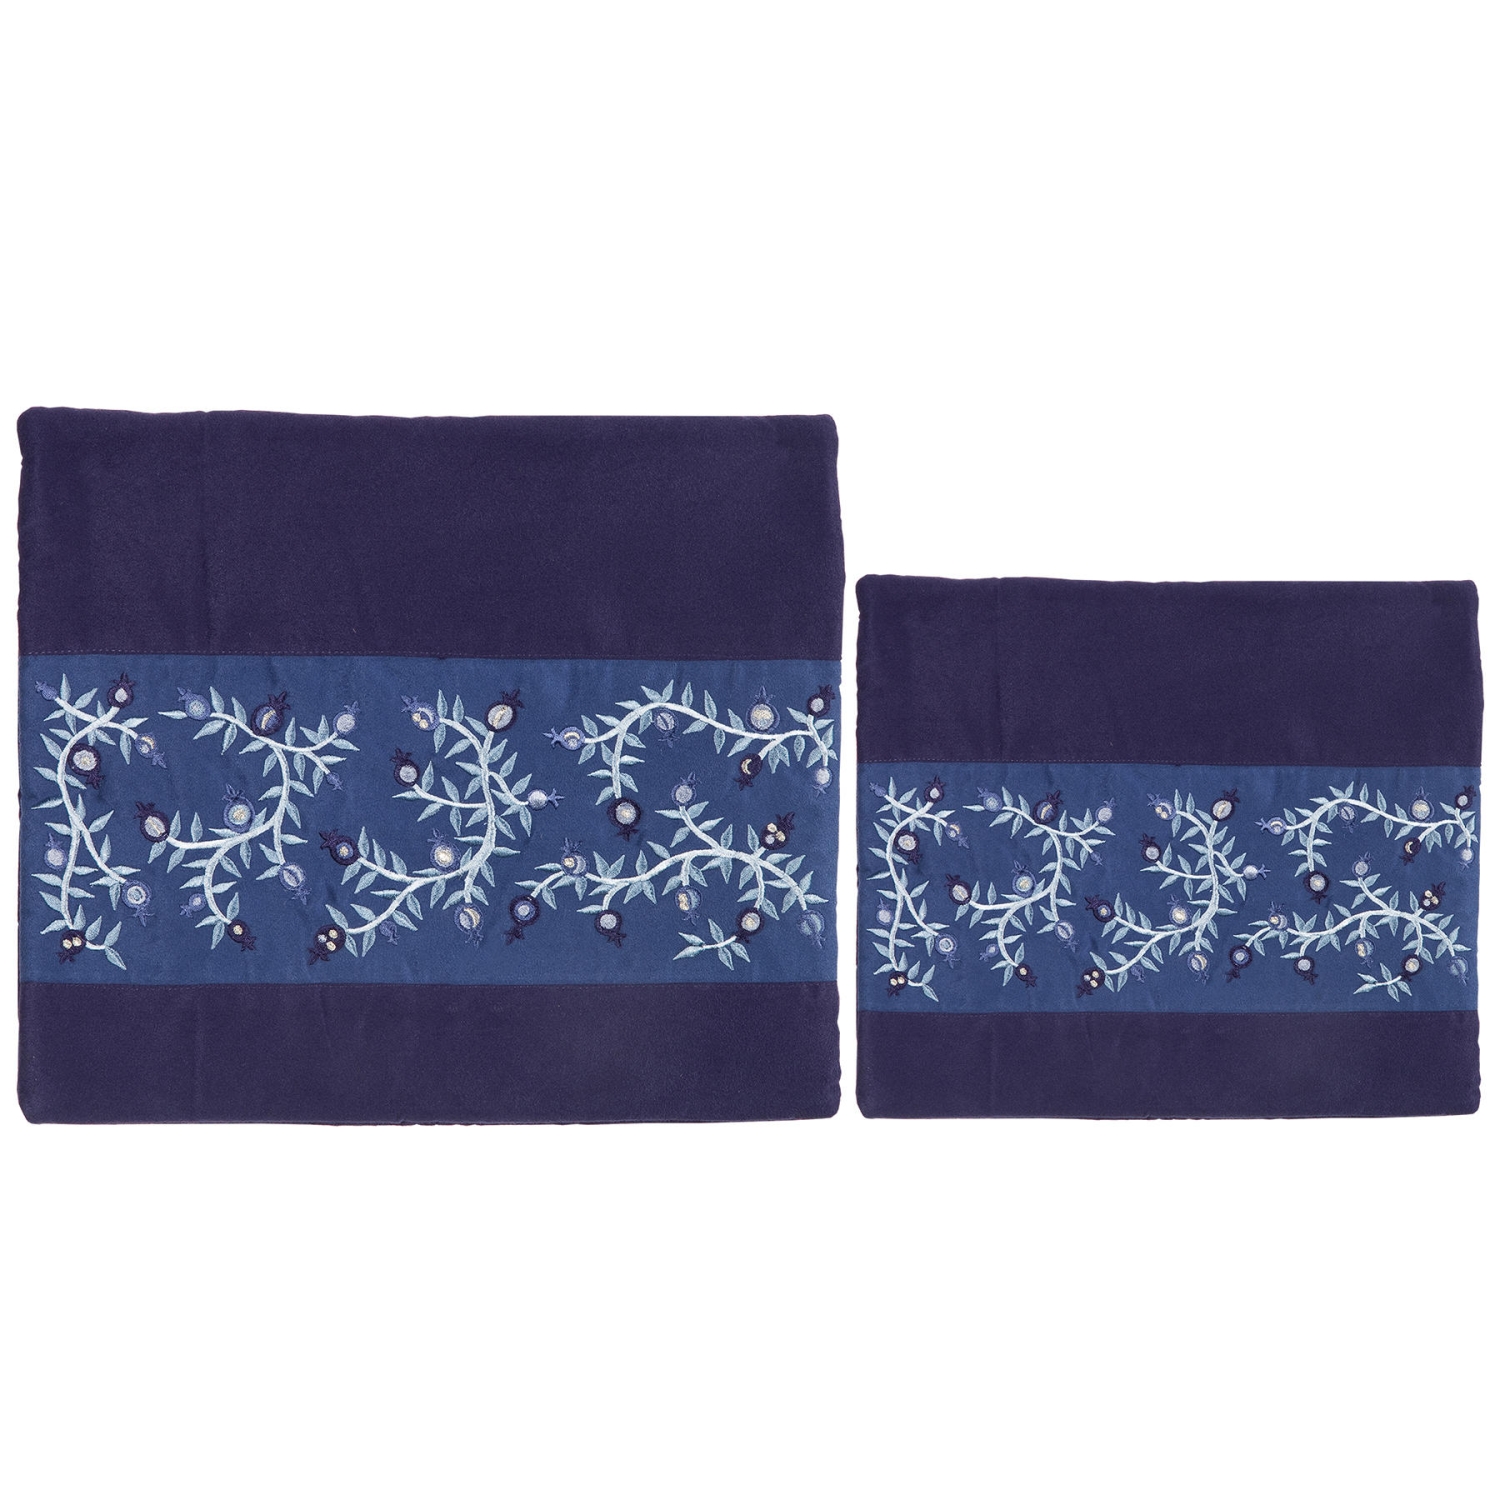 Yair Emanuel Embroidered Tallit and Tefillin Bag Set - Blue Pomegranates - 1